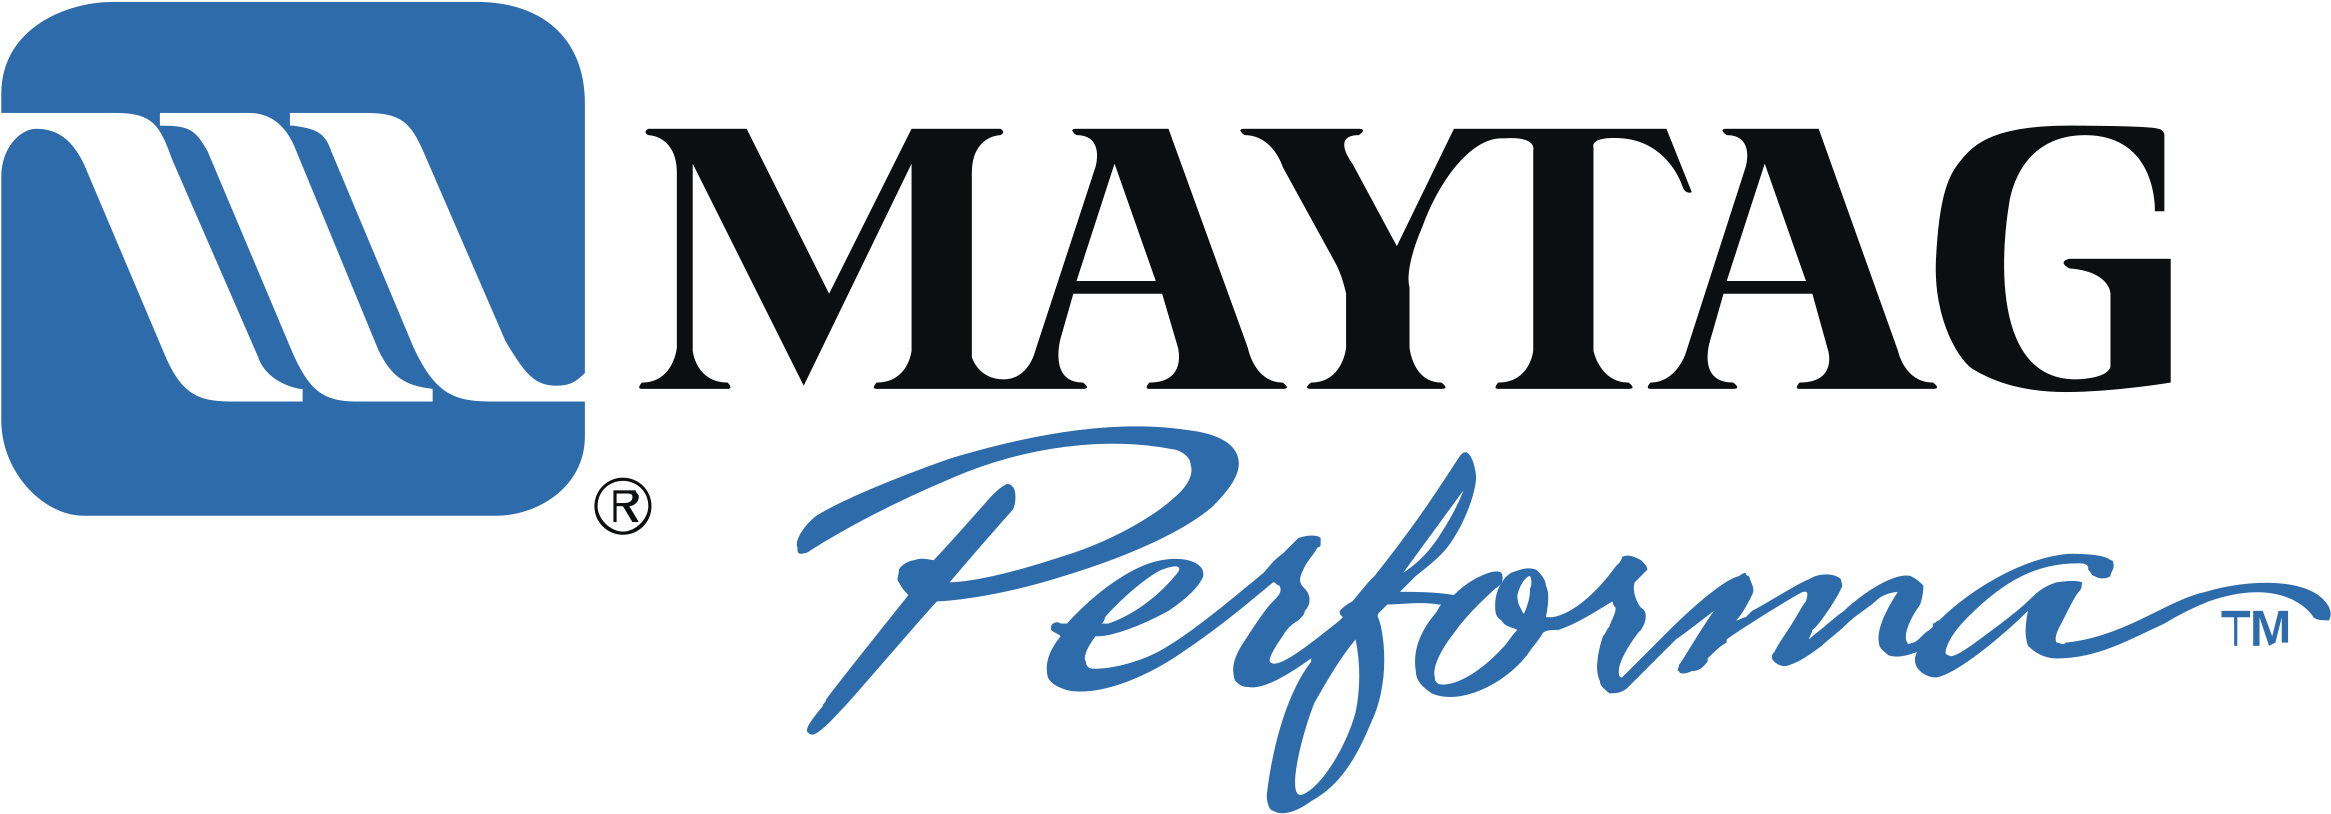 Matag Logo - Download Maytag Performa Logo Png Transparent PNG Image with No